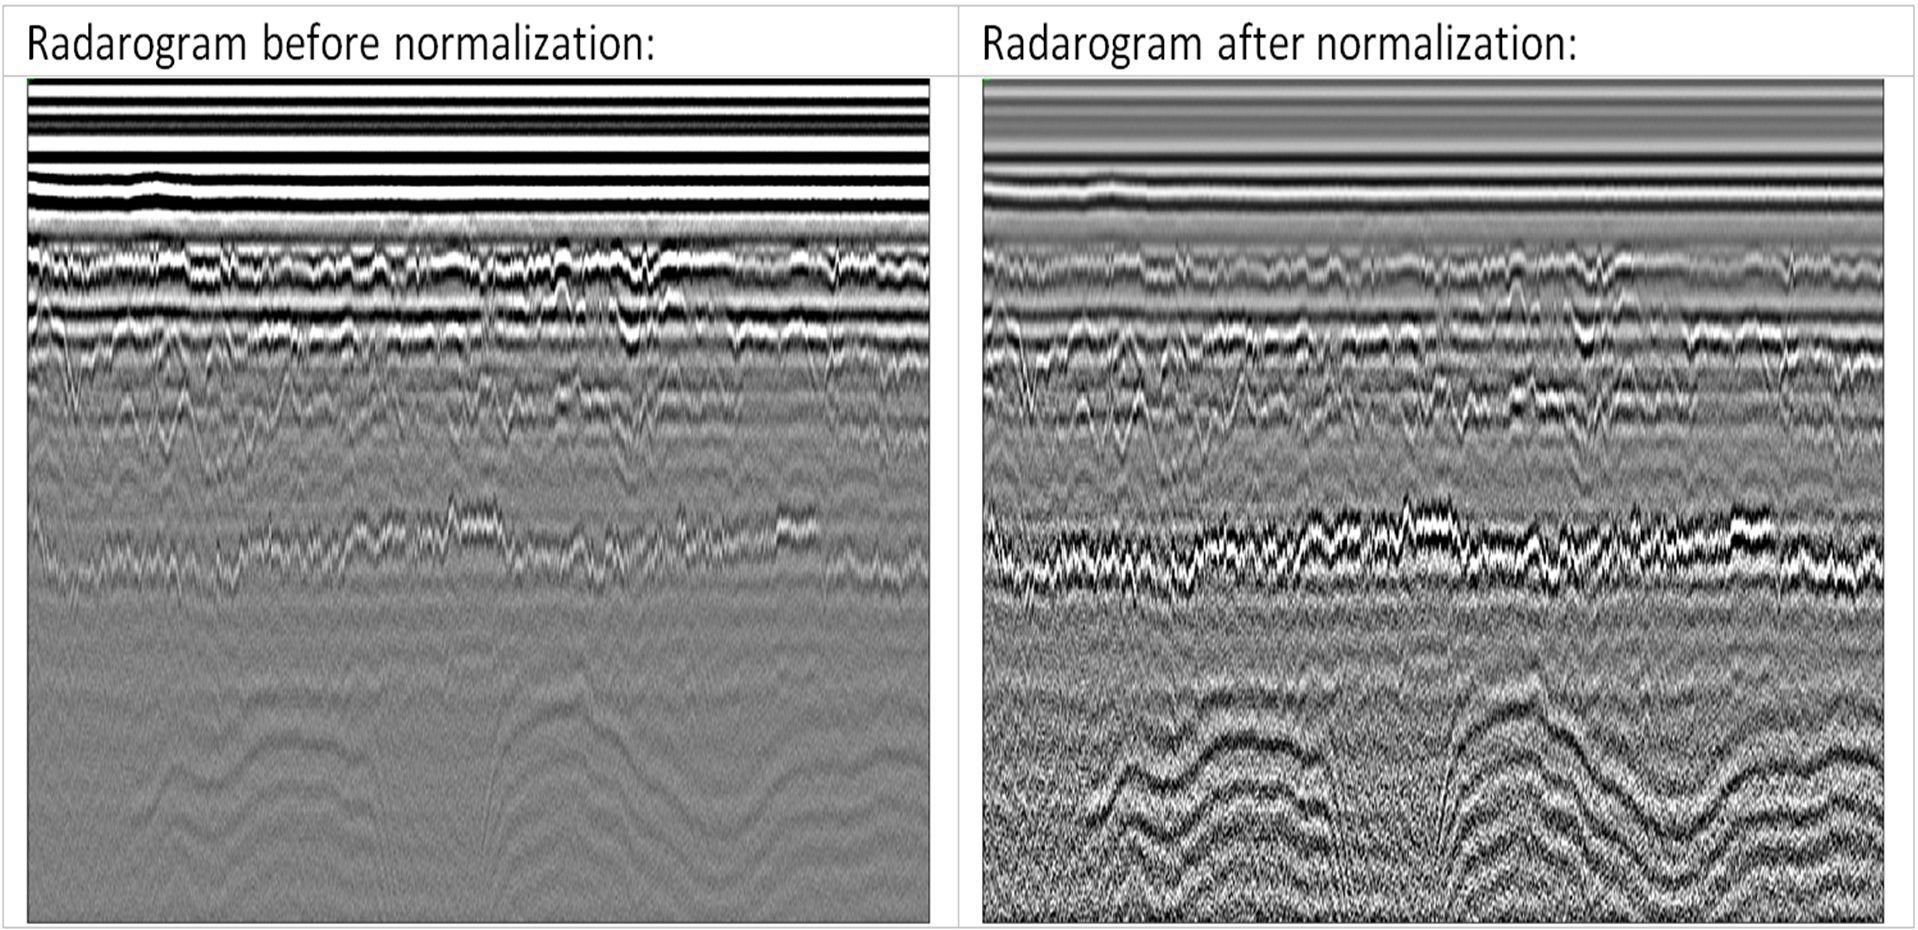 normalization of radarograms